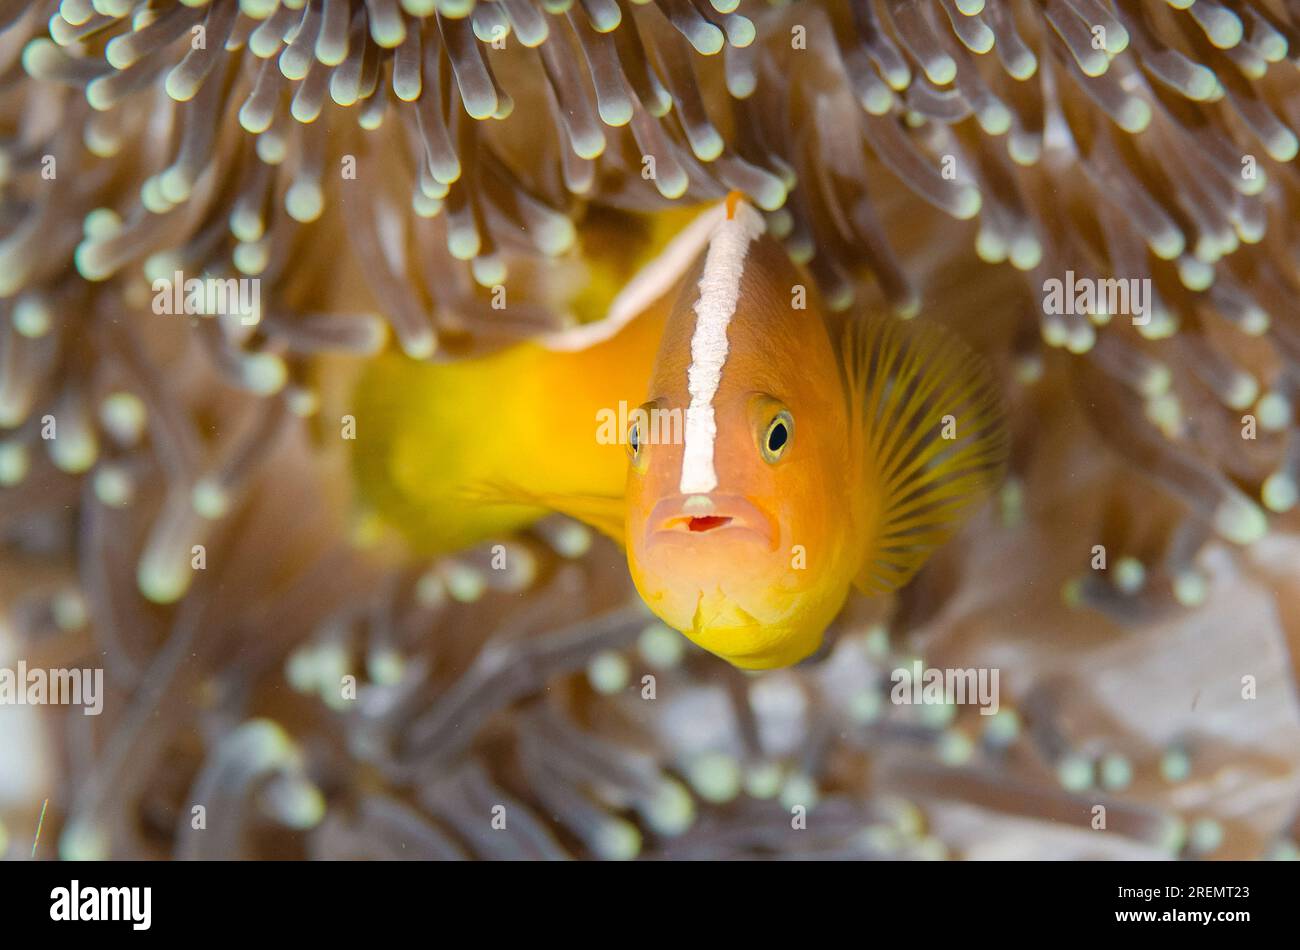 Orange Anemonefish, Amphiprion sandaracinos, in protective Leathery Sea Anemone, Heteractis crispa, Lone Tree dive site, Dili, East Timor Stock Photo